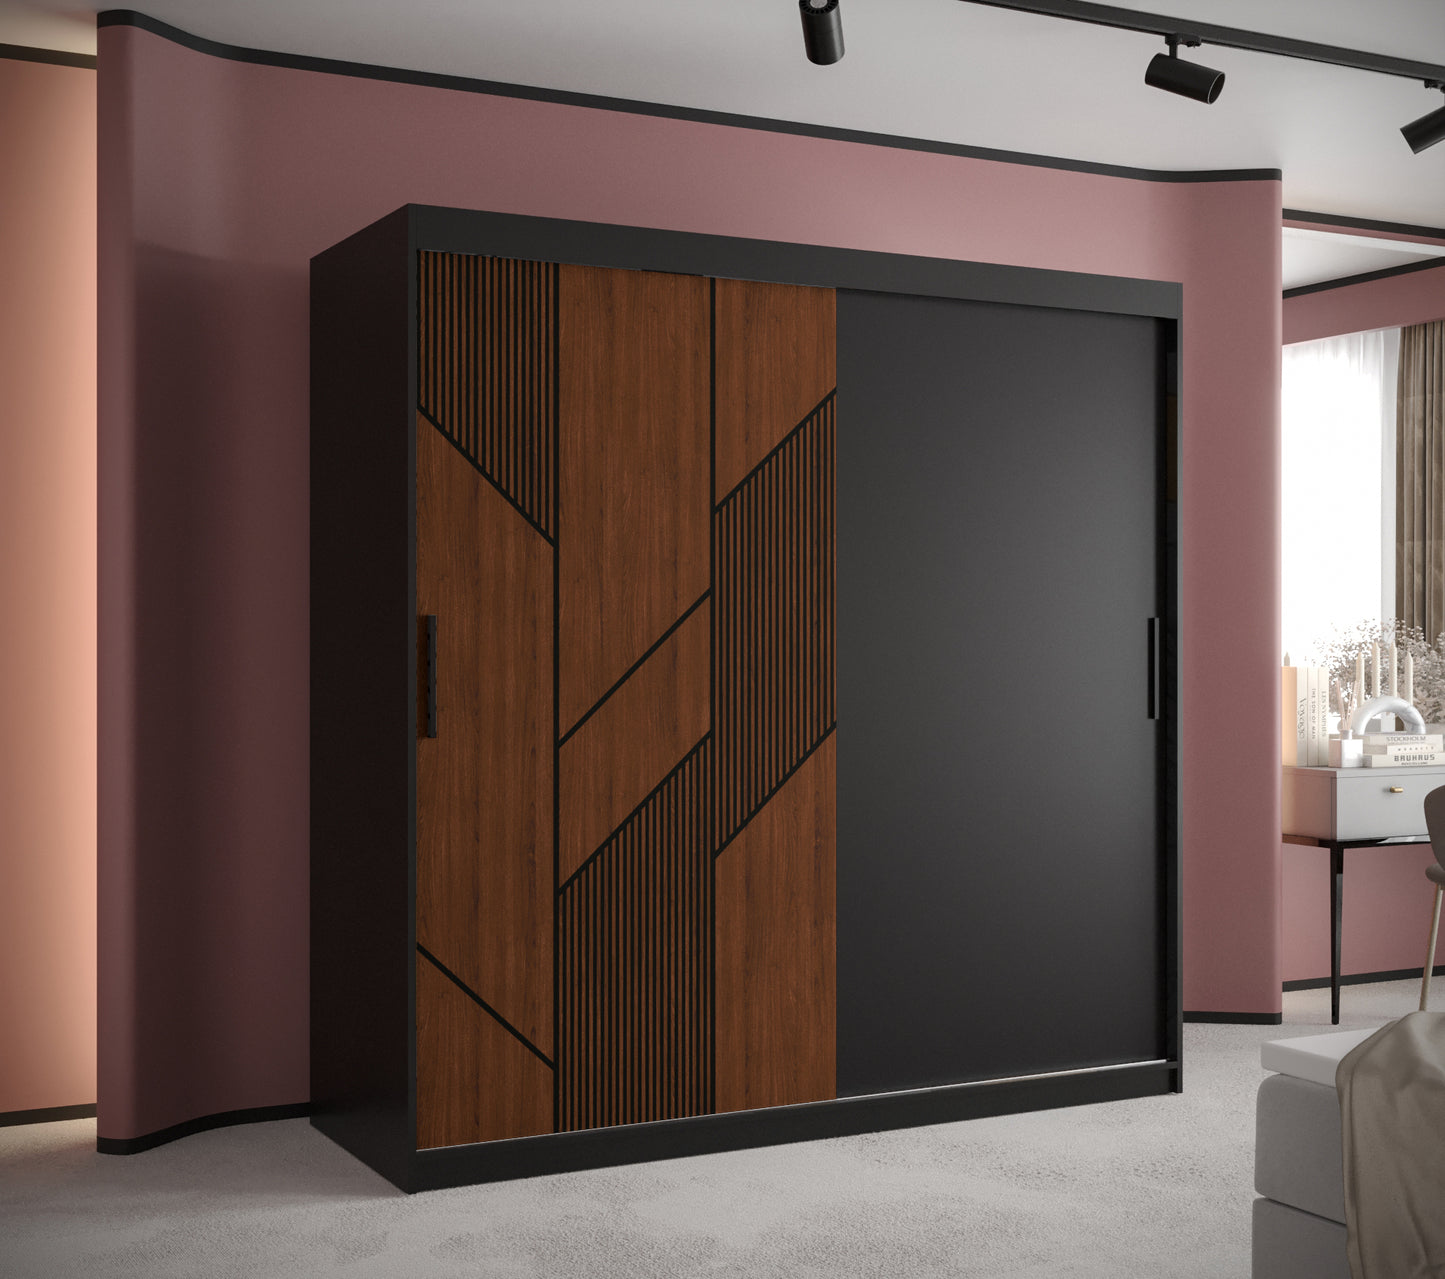 SYDNEY - Wardrobe Sliding Doors Black with Unique Pattern, Shelves, Rails, Drawers Optional >180cm<